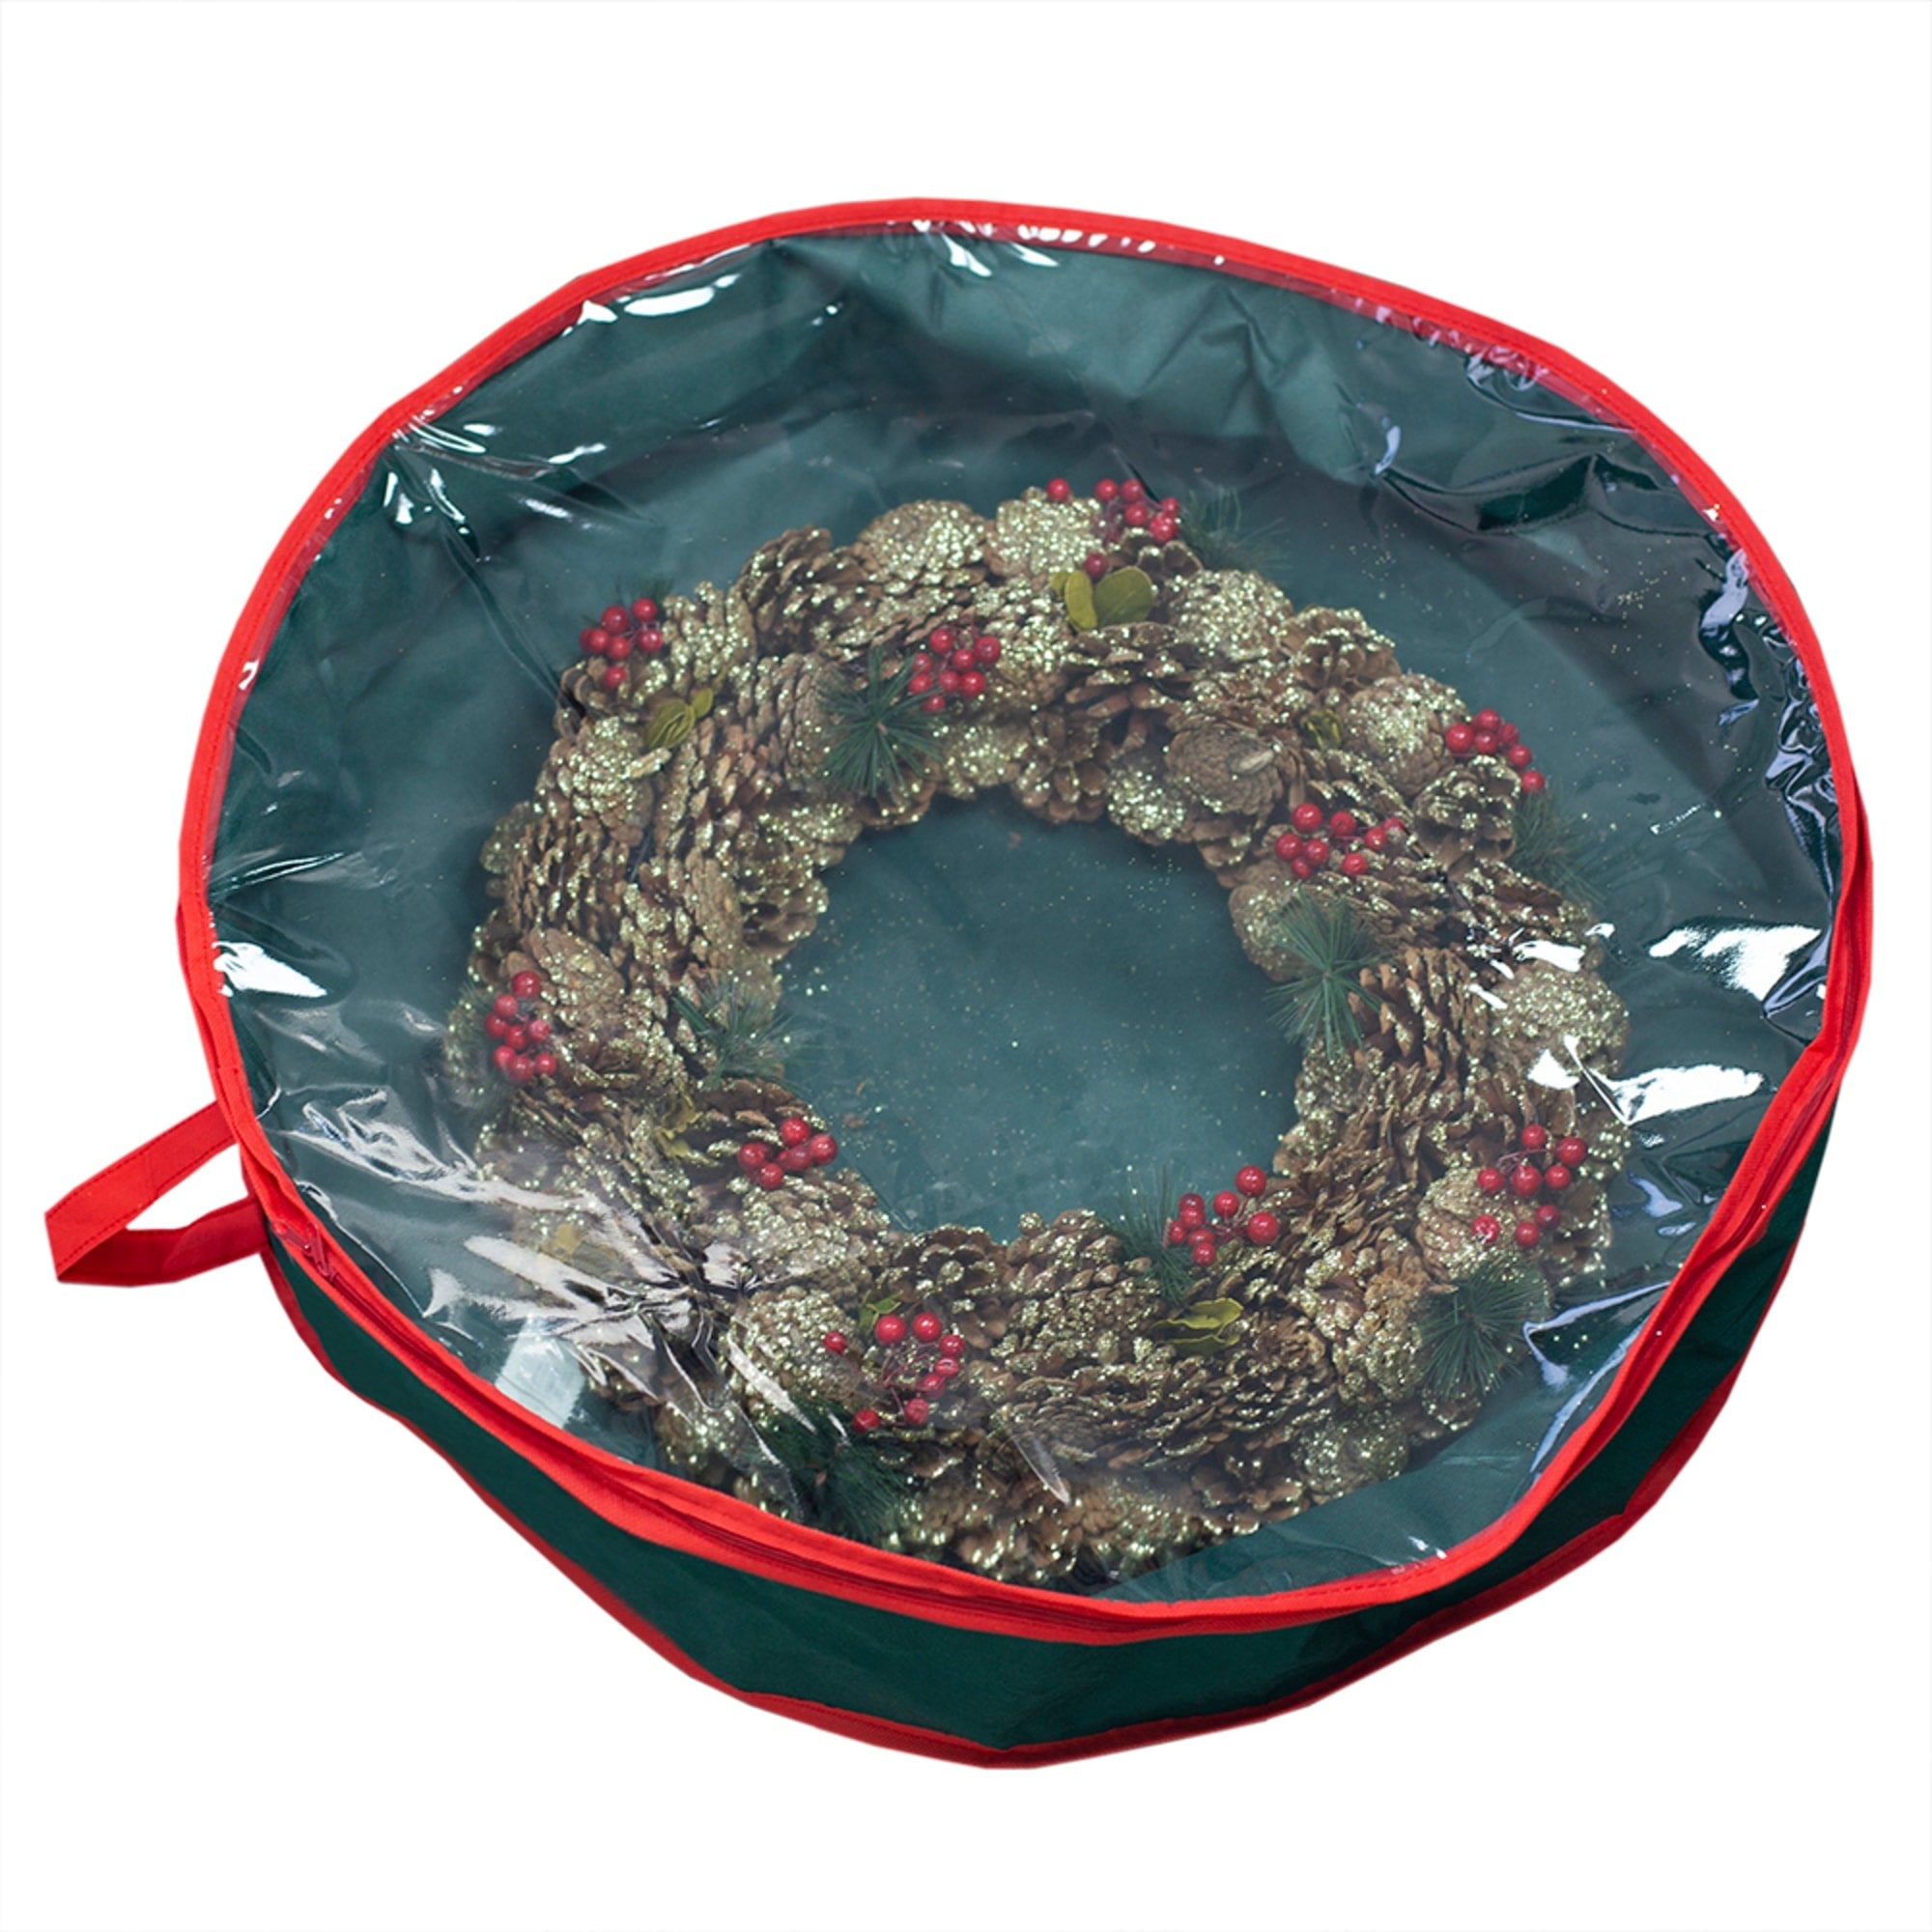 Home Basics 25" Christmas Wreath Bag, Green $4.00 EACH, CASE PACK OF 12